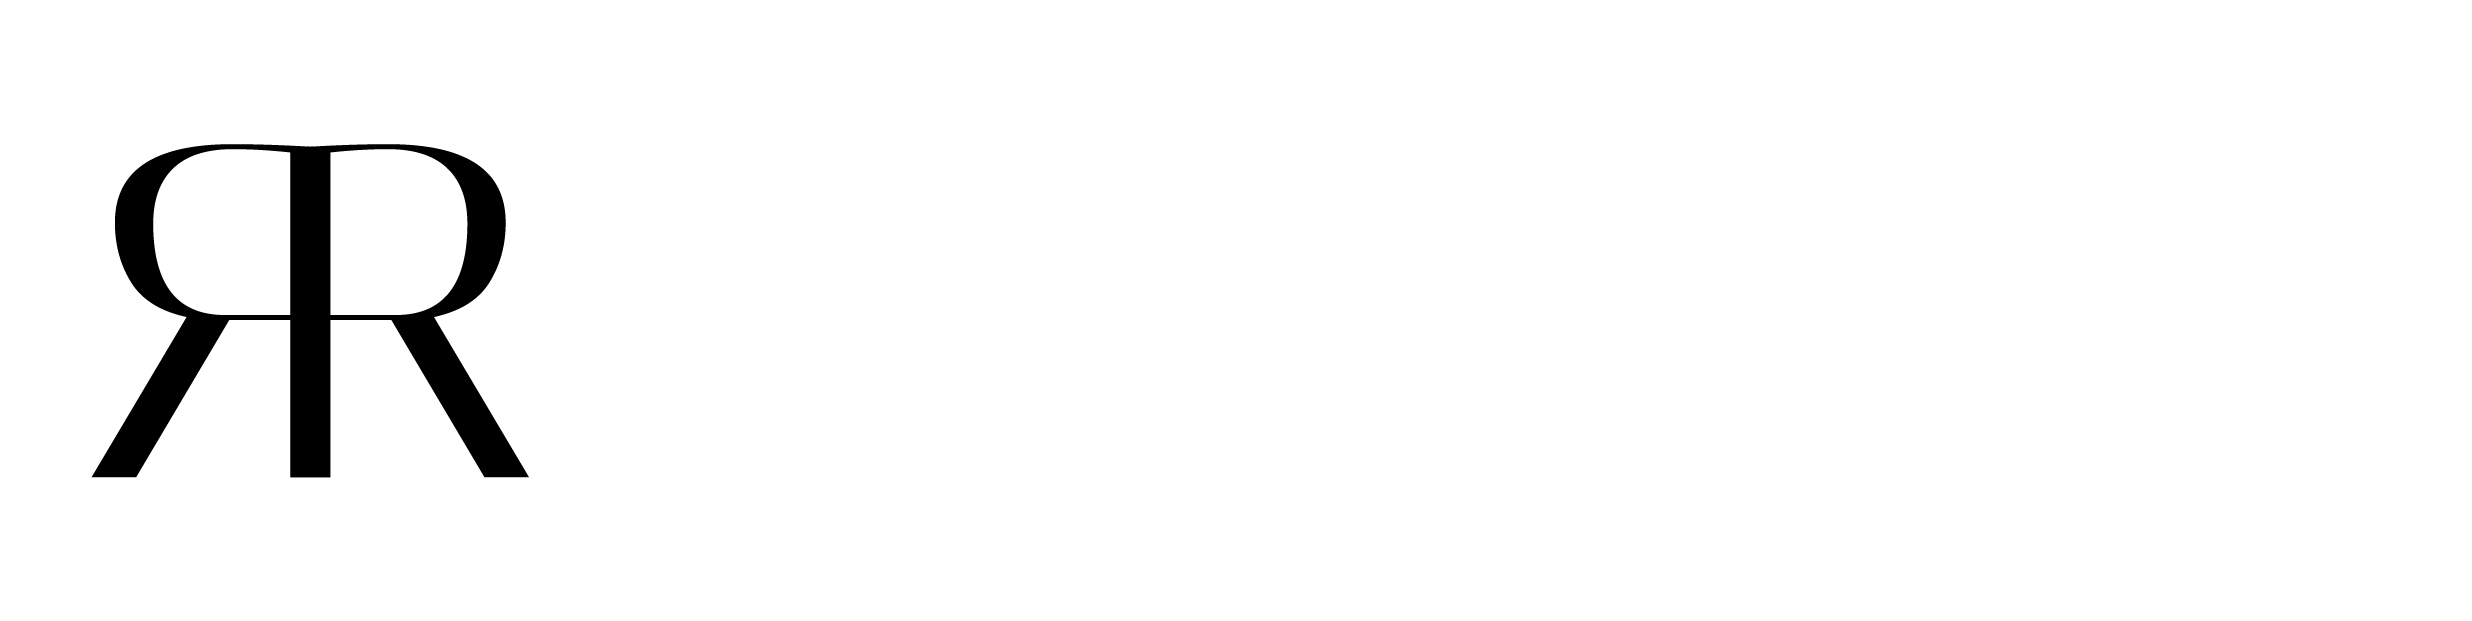 Reir.it-Compra Cosmetici e Profumi online